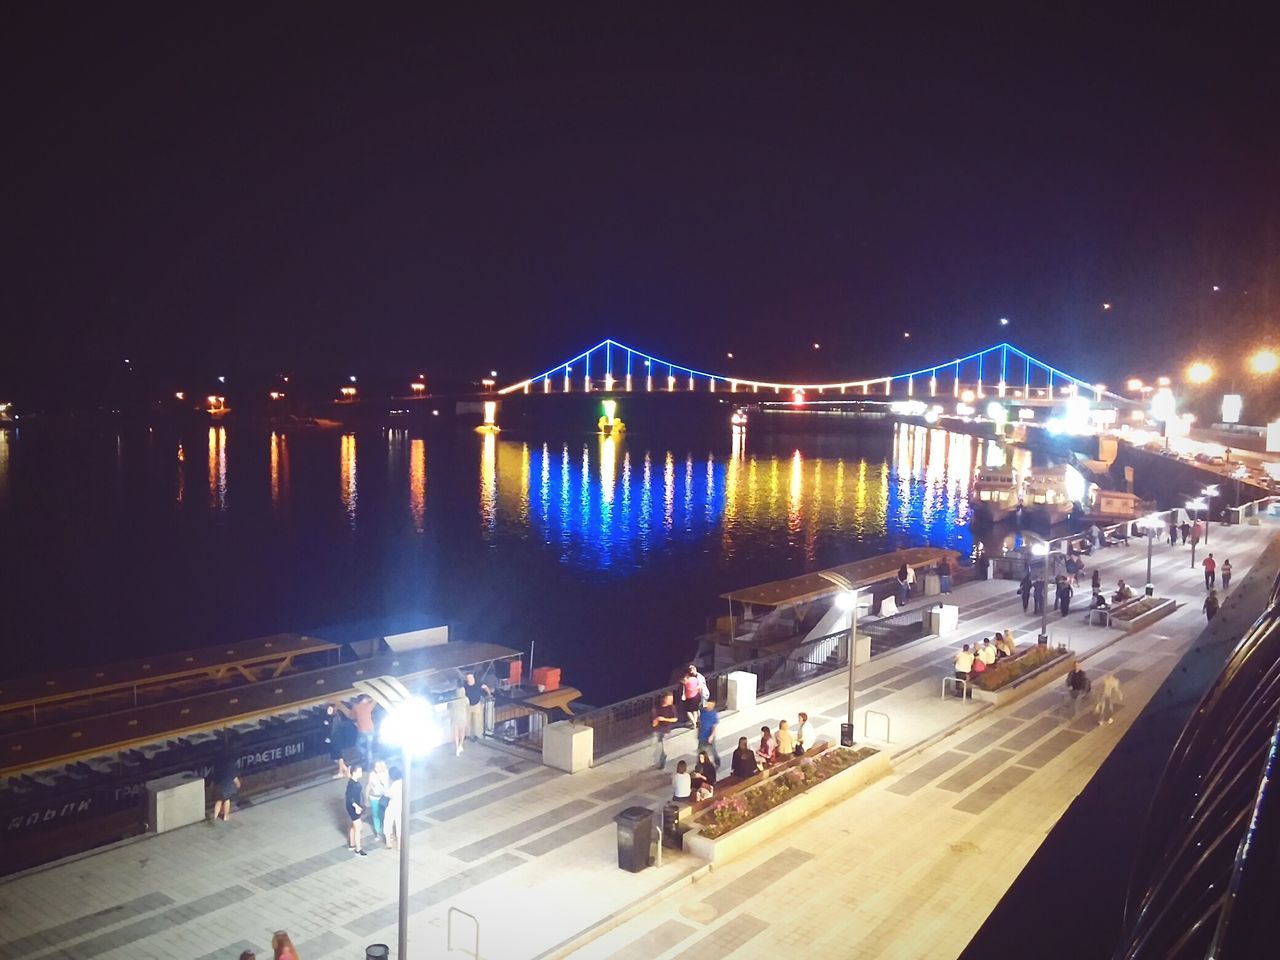 illuminated, night, transportation, water, reflection, calm, dark, outdoors, sea, city life, ocean, bridge